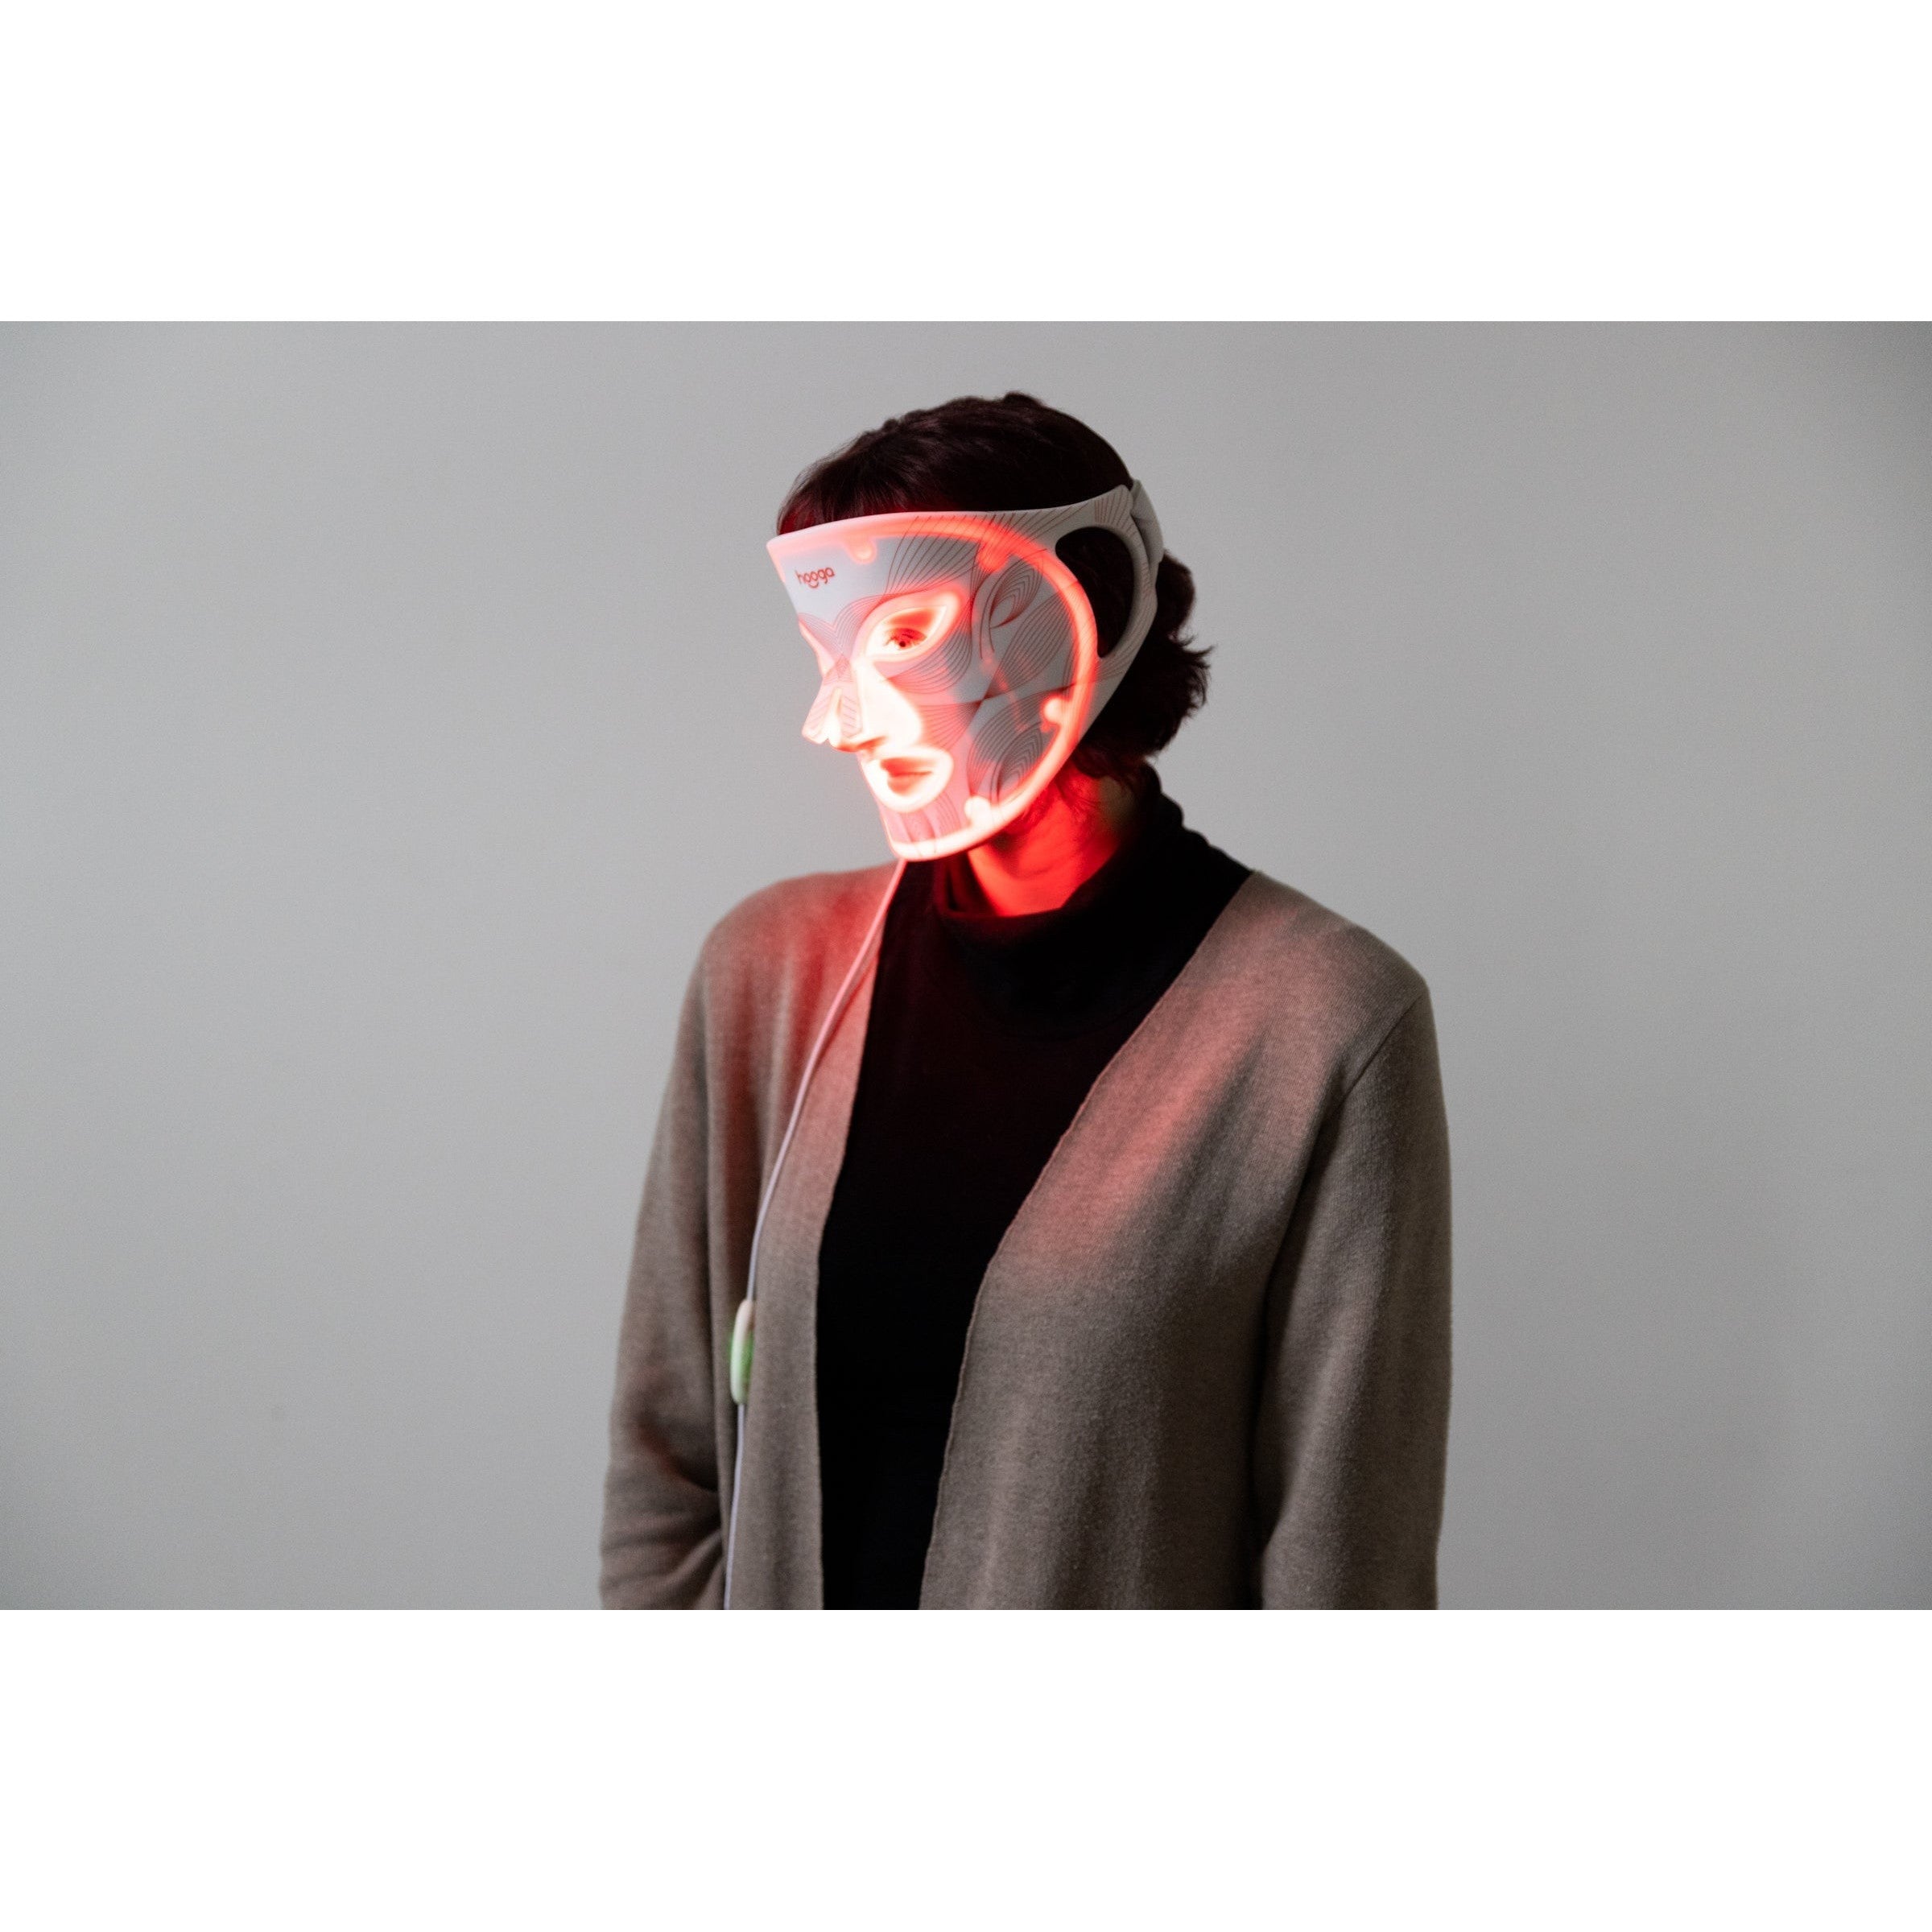 Hooga 7 Color LED Light Mask